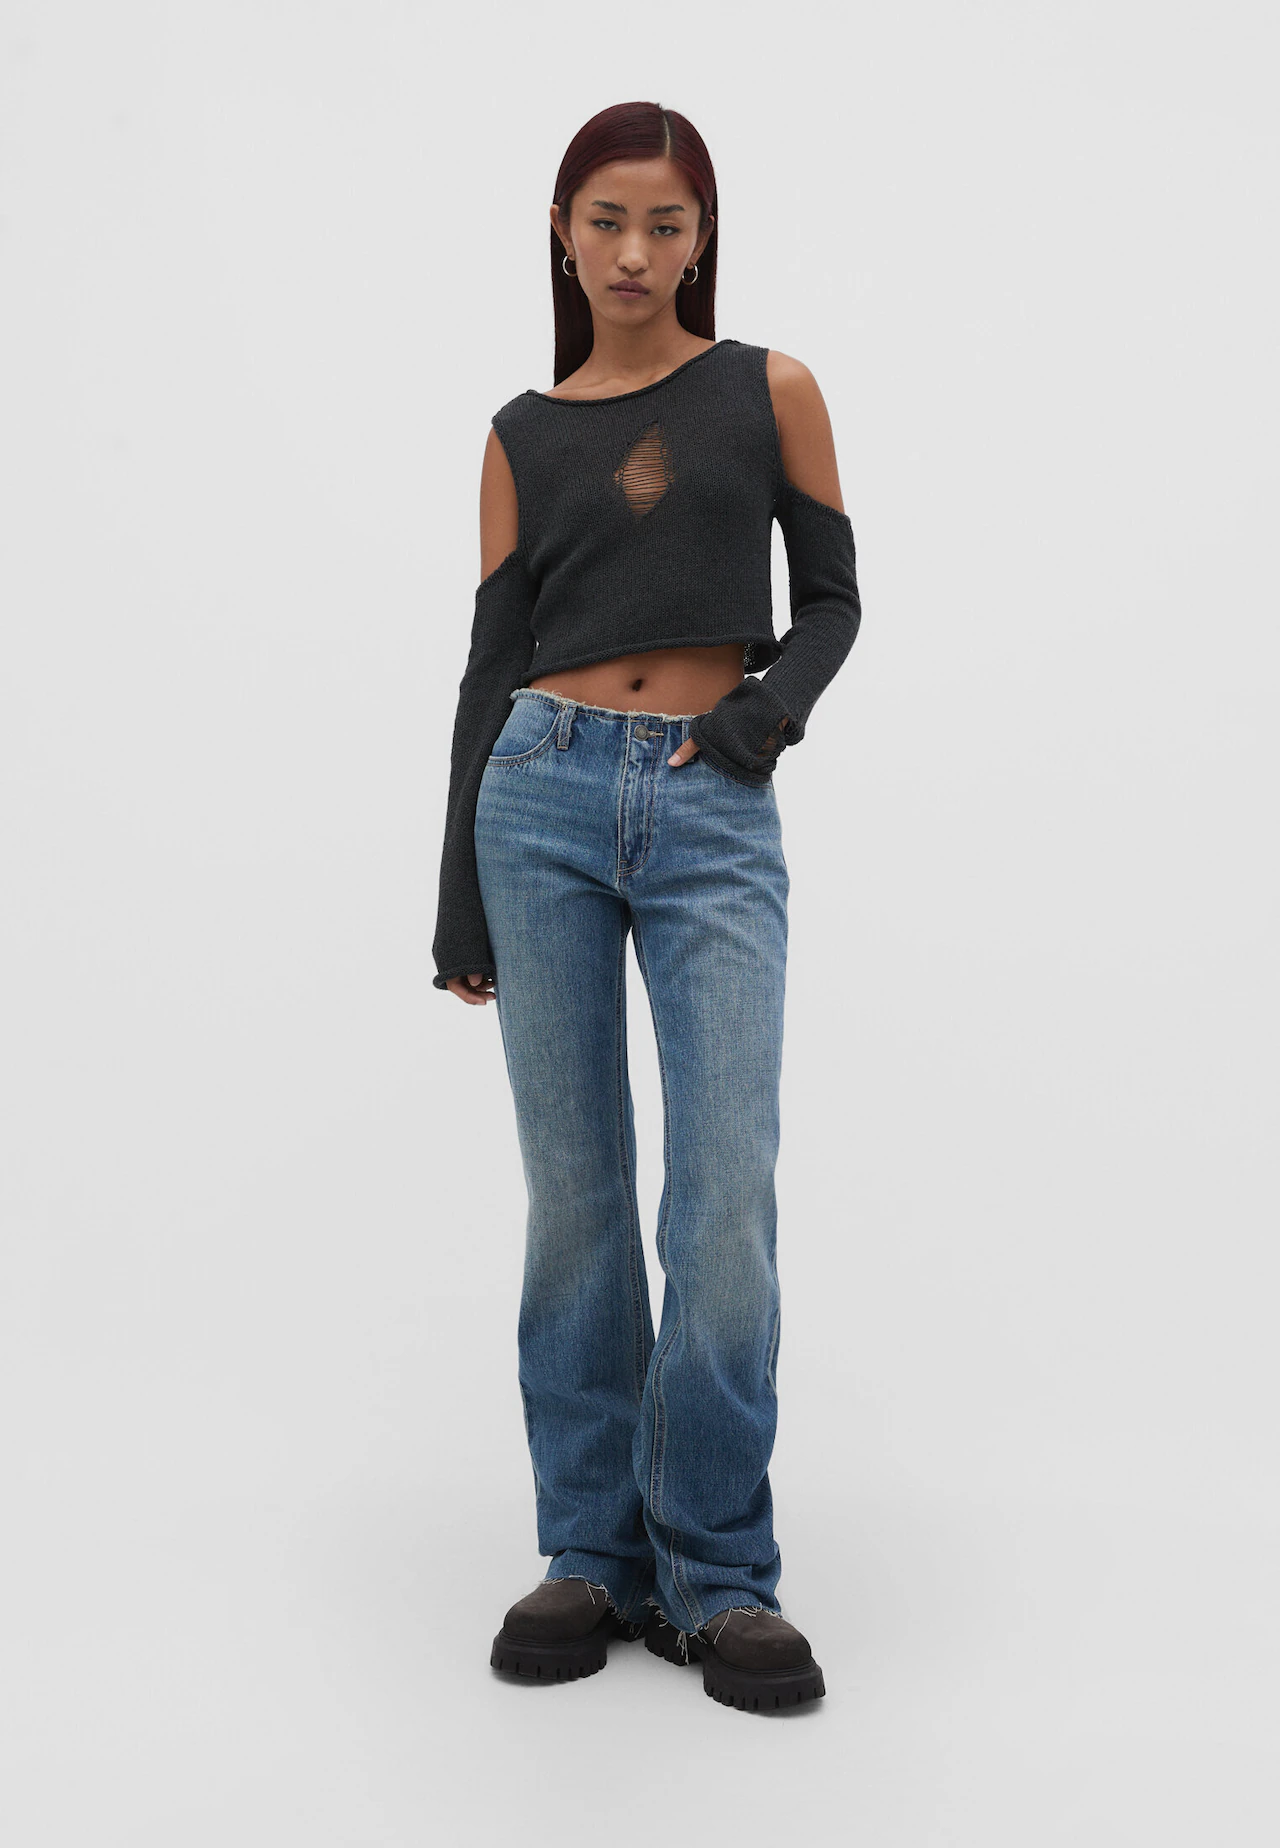 Low-waist flare jeans - Women's fashion